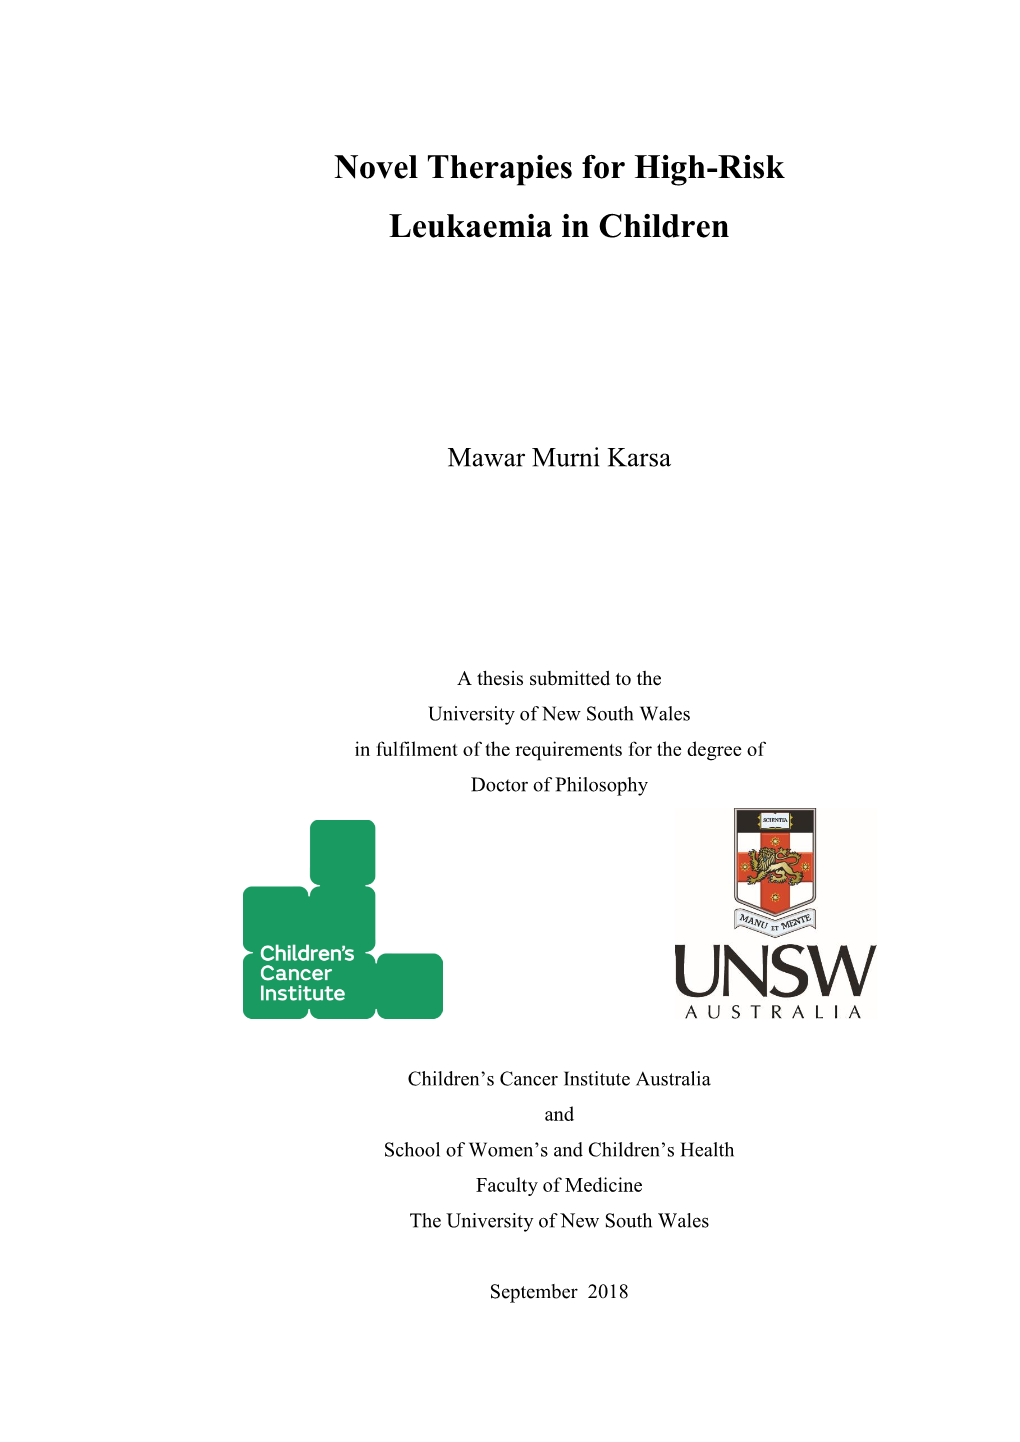 Novel Therapies for High-Risk Leukaemia in Children